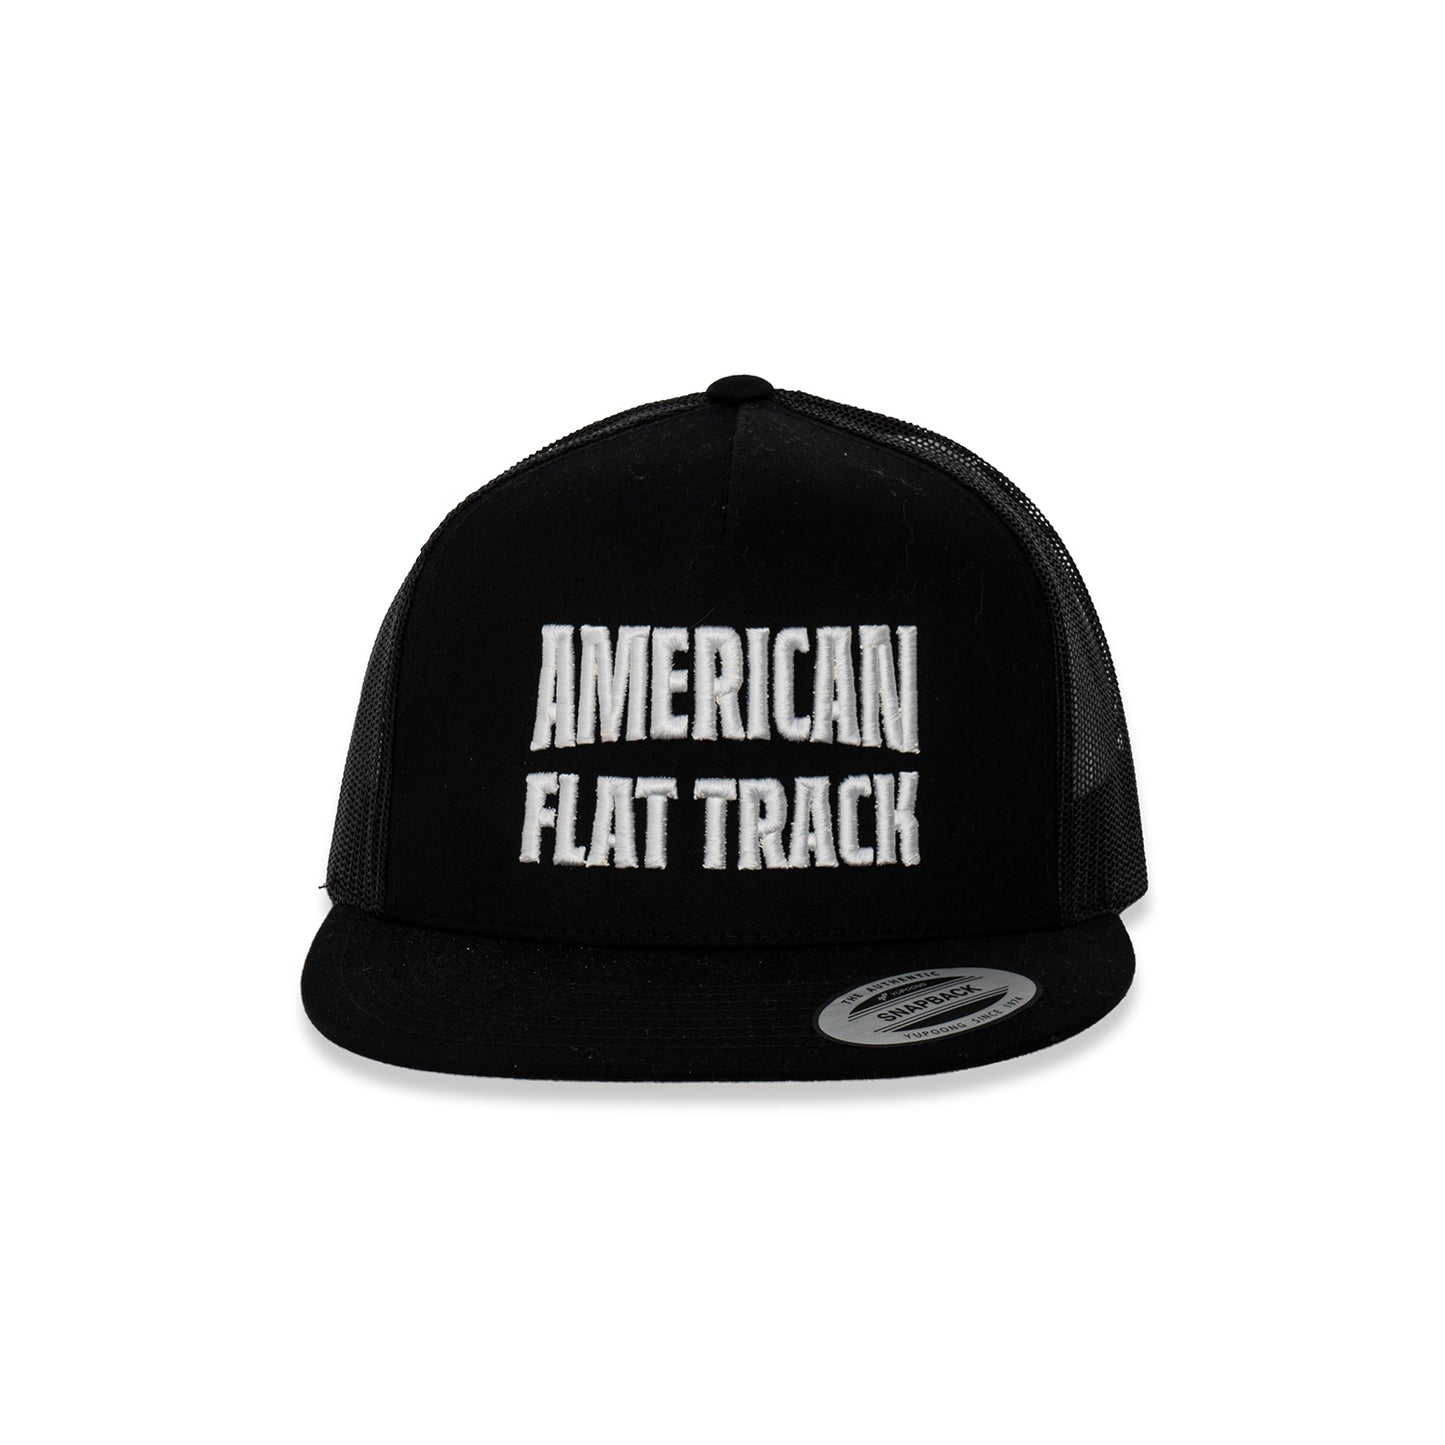 American Flat Track Text Trucker Hat - Black